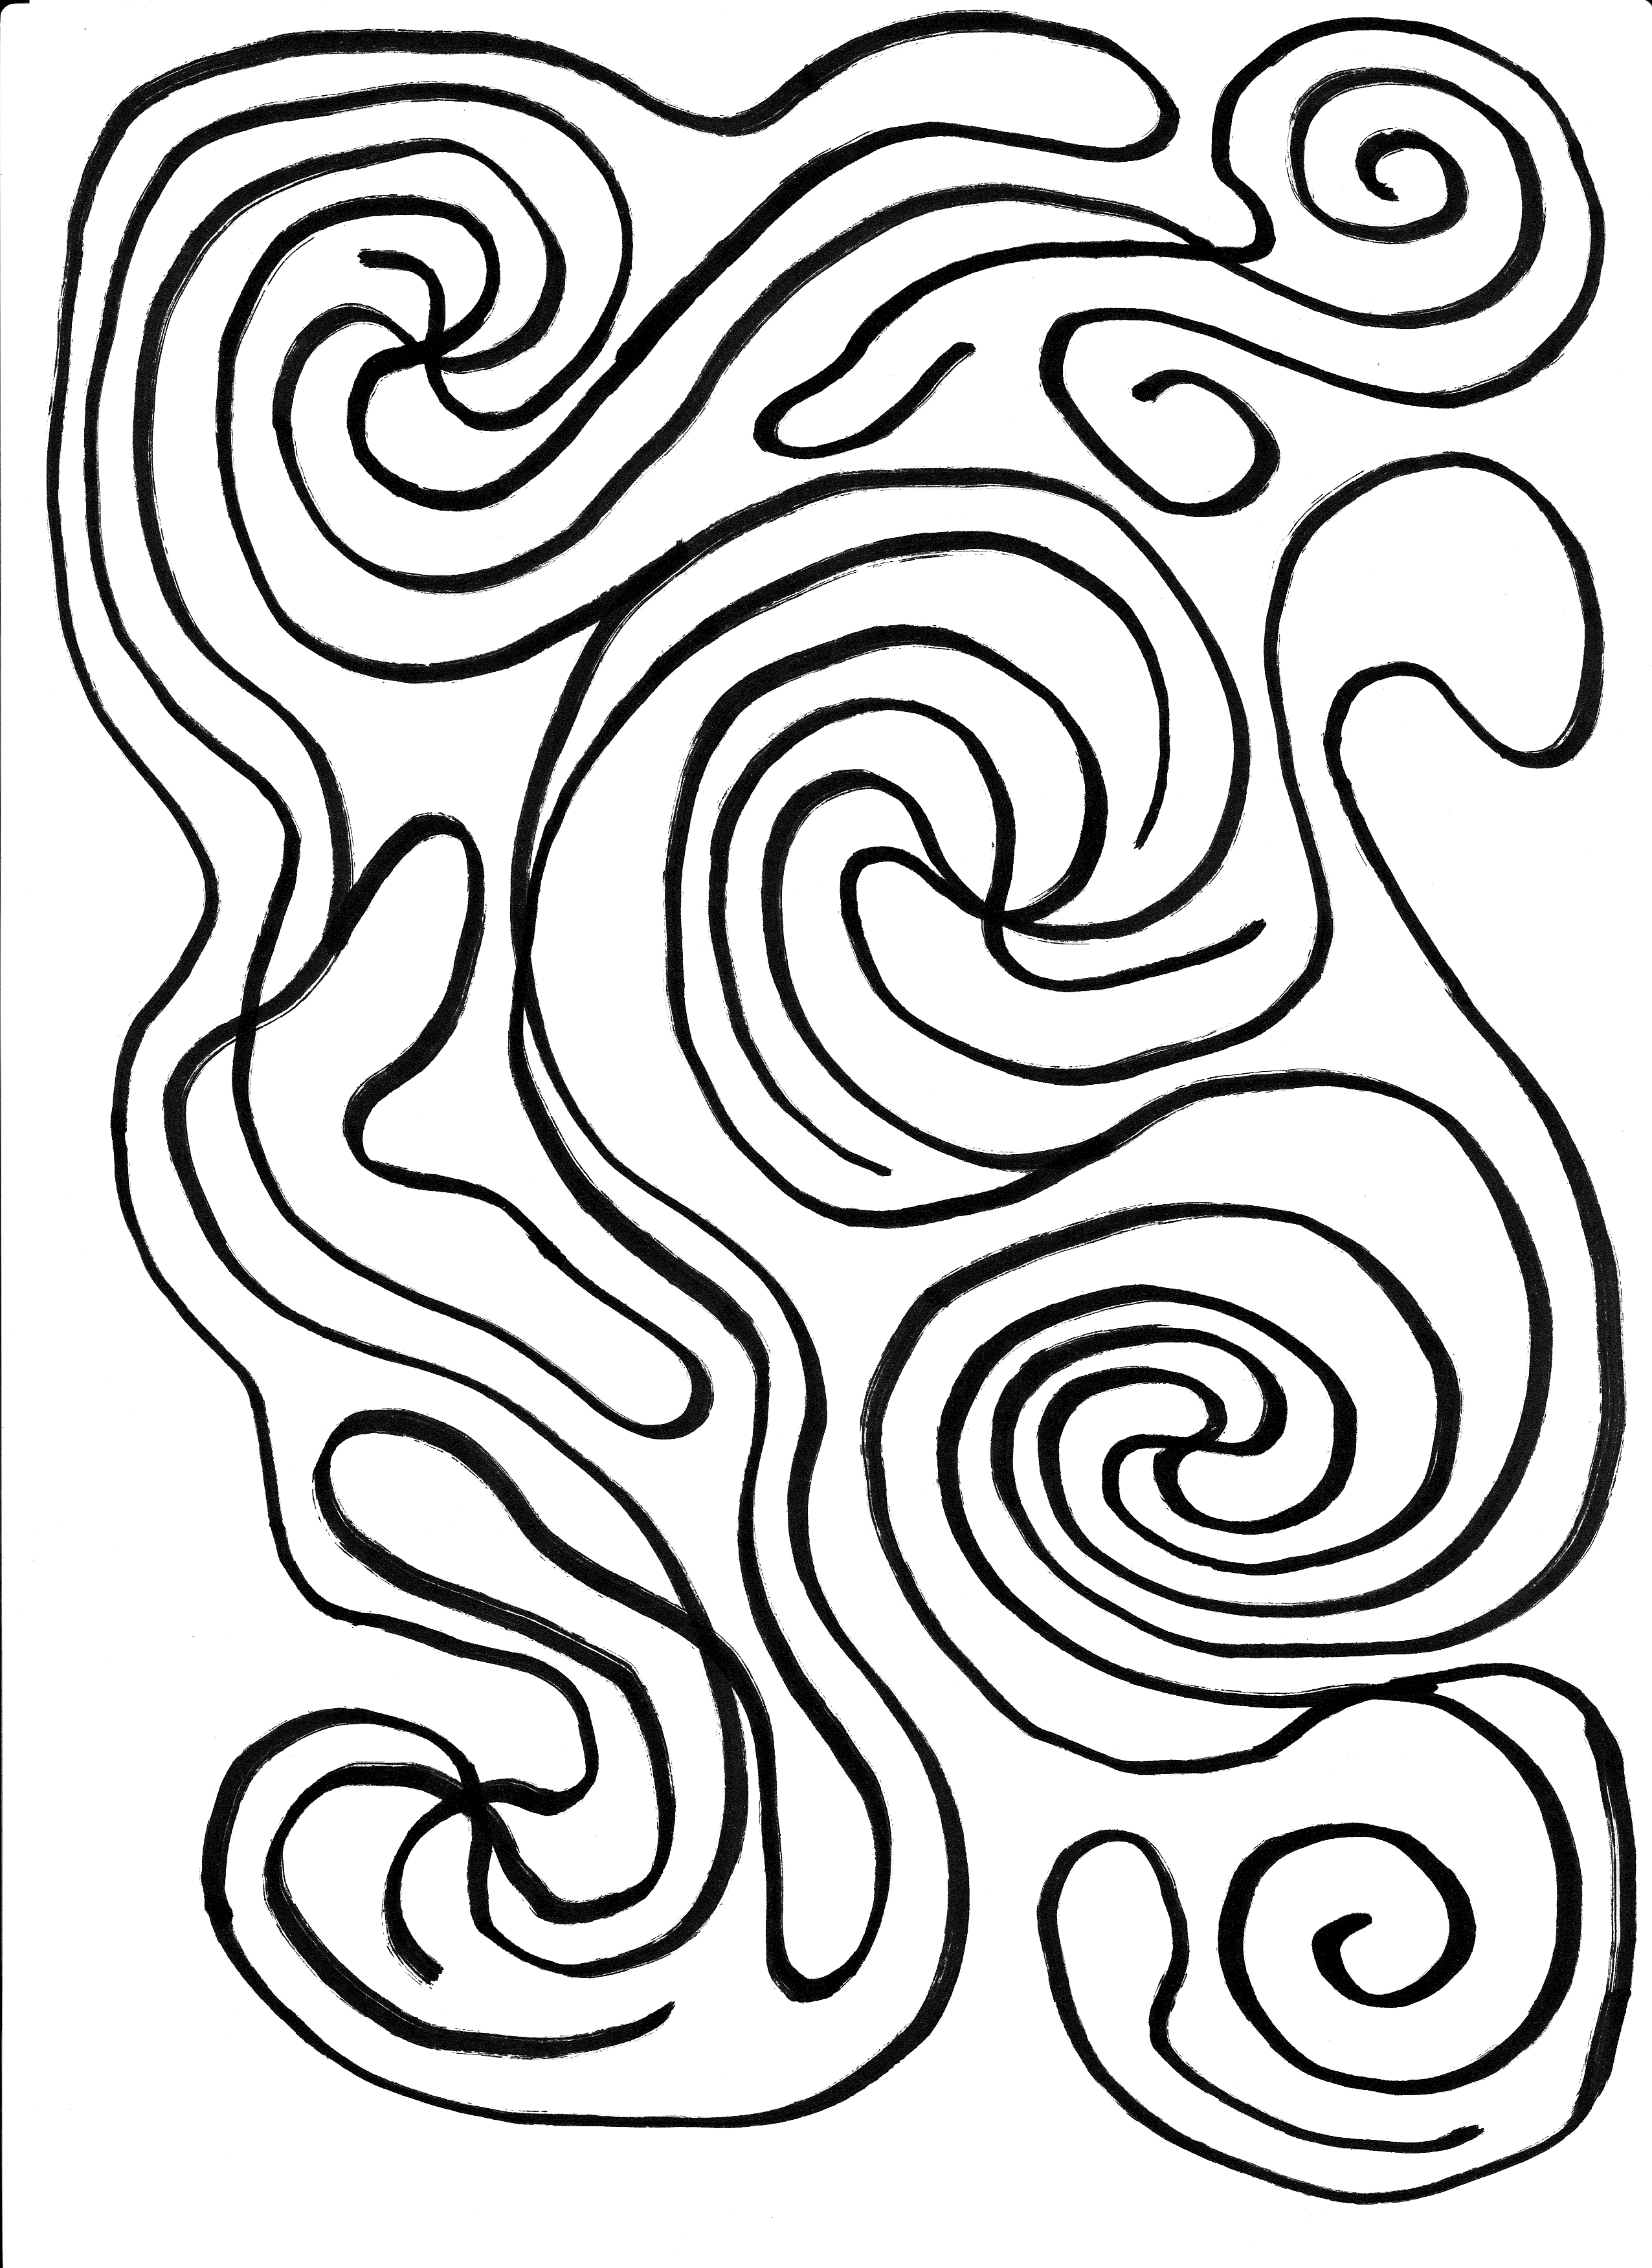 My new spiral print